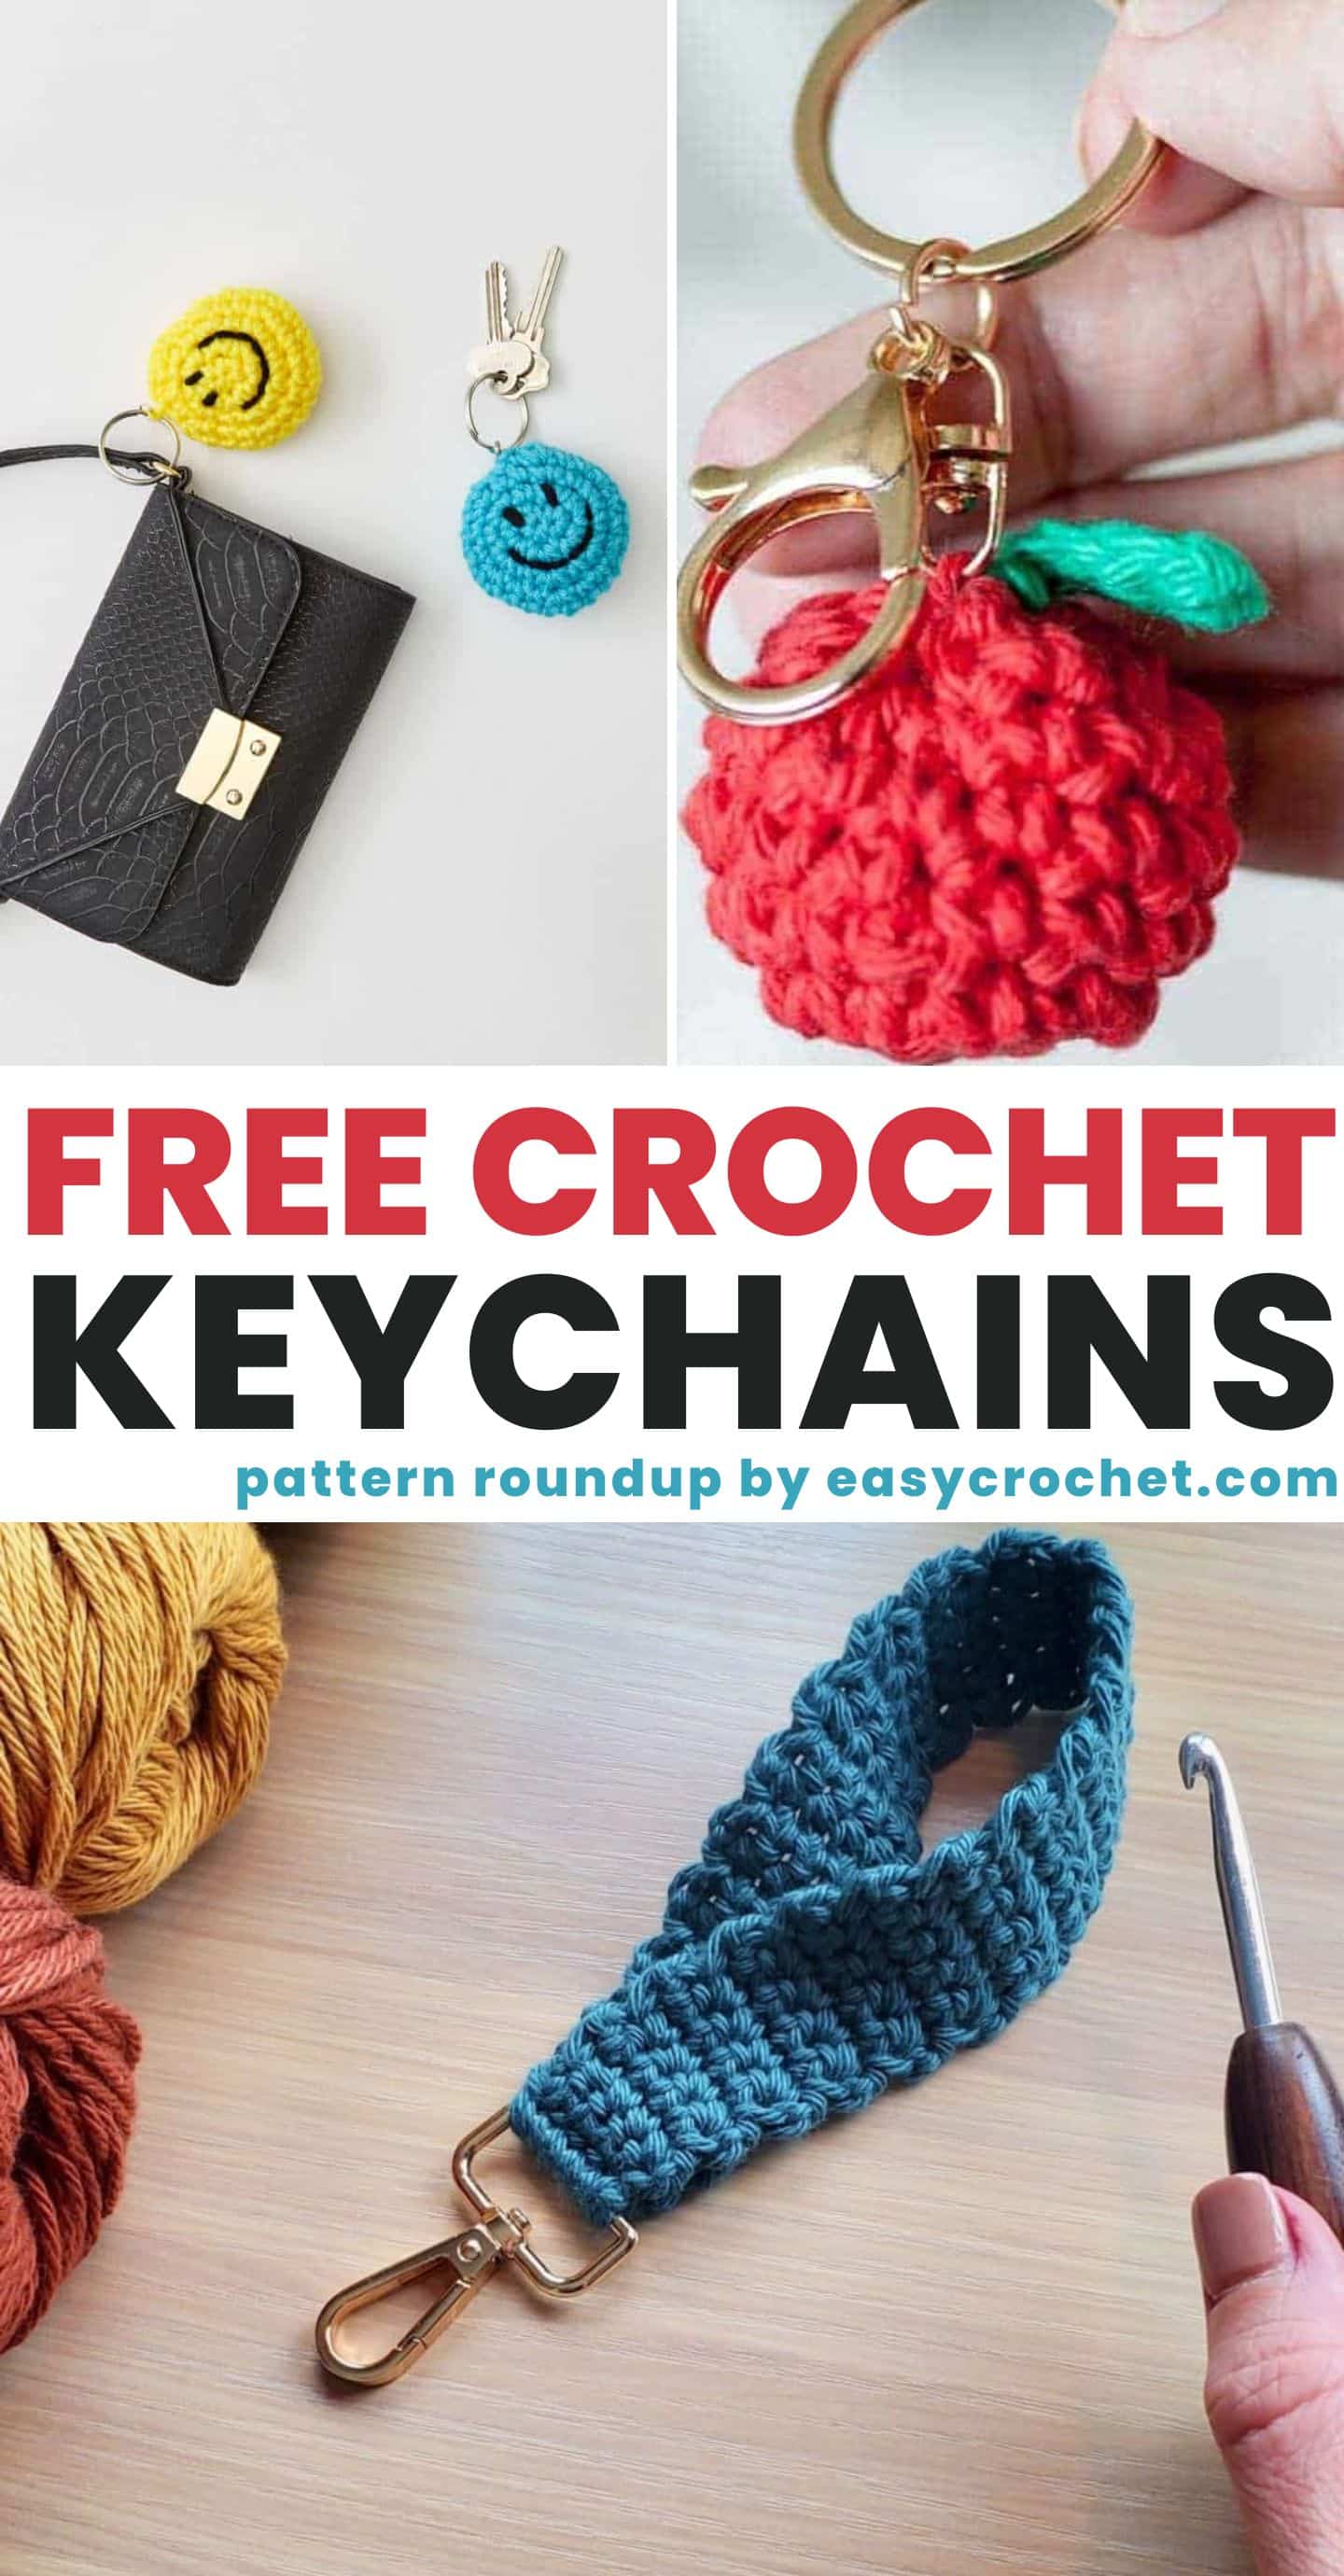 27 Free Crochet Keychain Patterns You'll Love - Easy Crochet Patterns